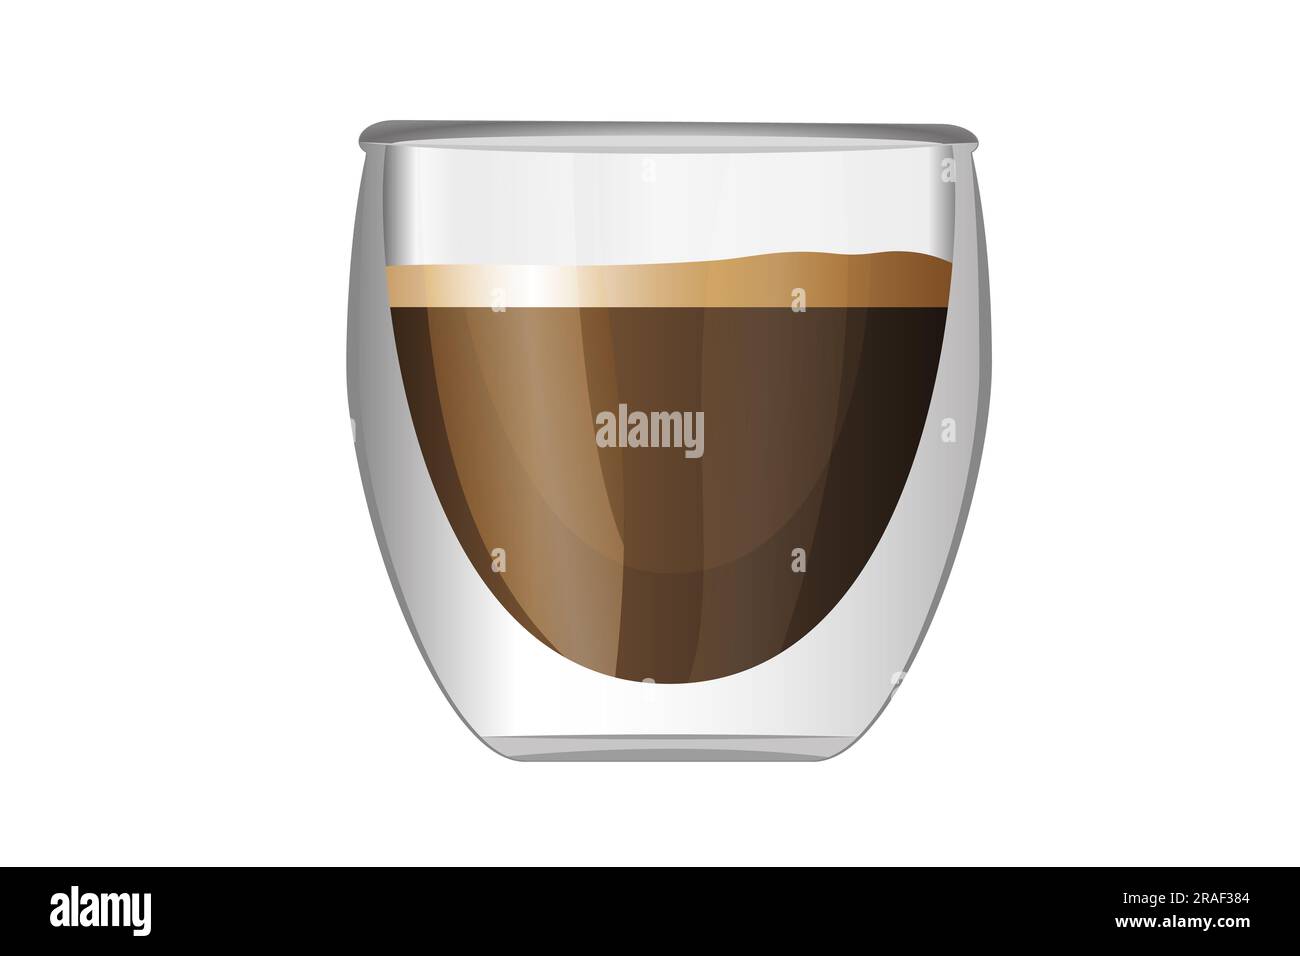 https://c8.alamy.com/comp/2RAF384/cappucino-in-double-walled-clear-glass-coffee-mug-vector-illustration-2RAF384.jpg